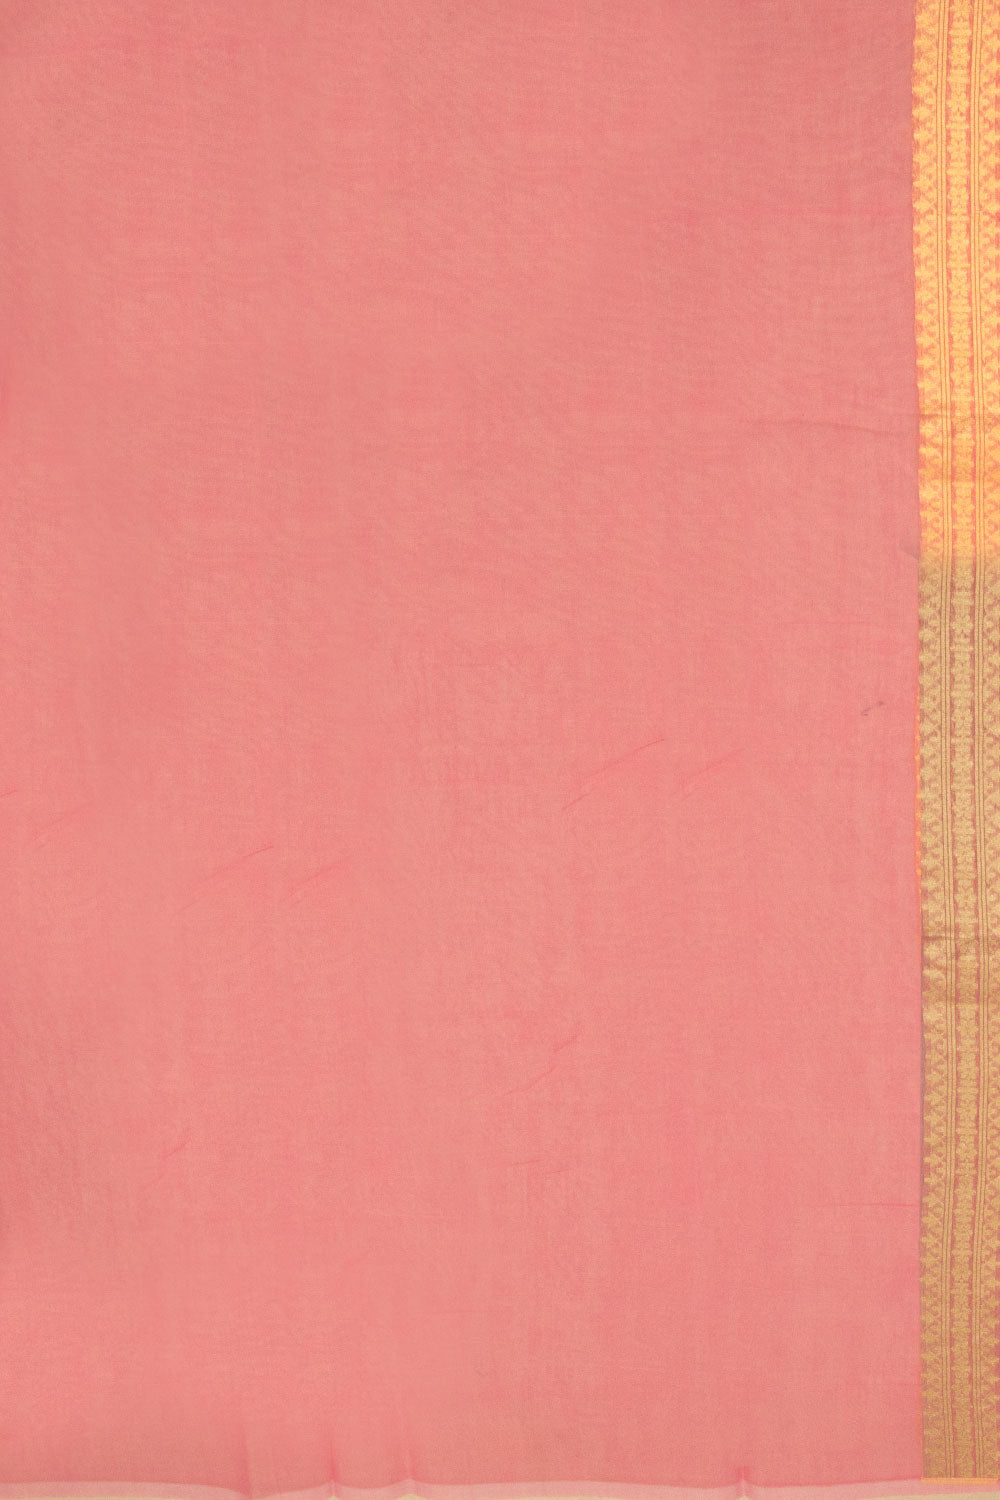 Pink Handloom Banarasi Cotton Saree - Avishya 